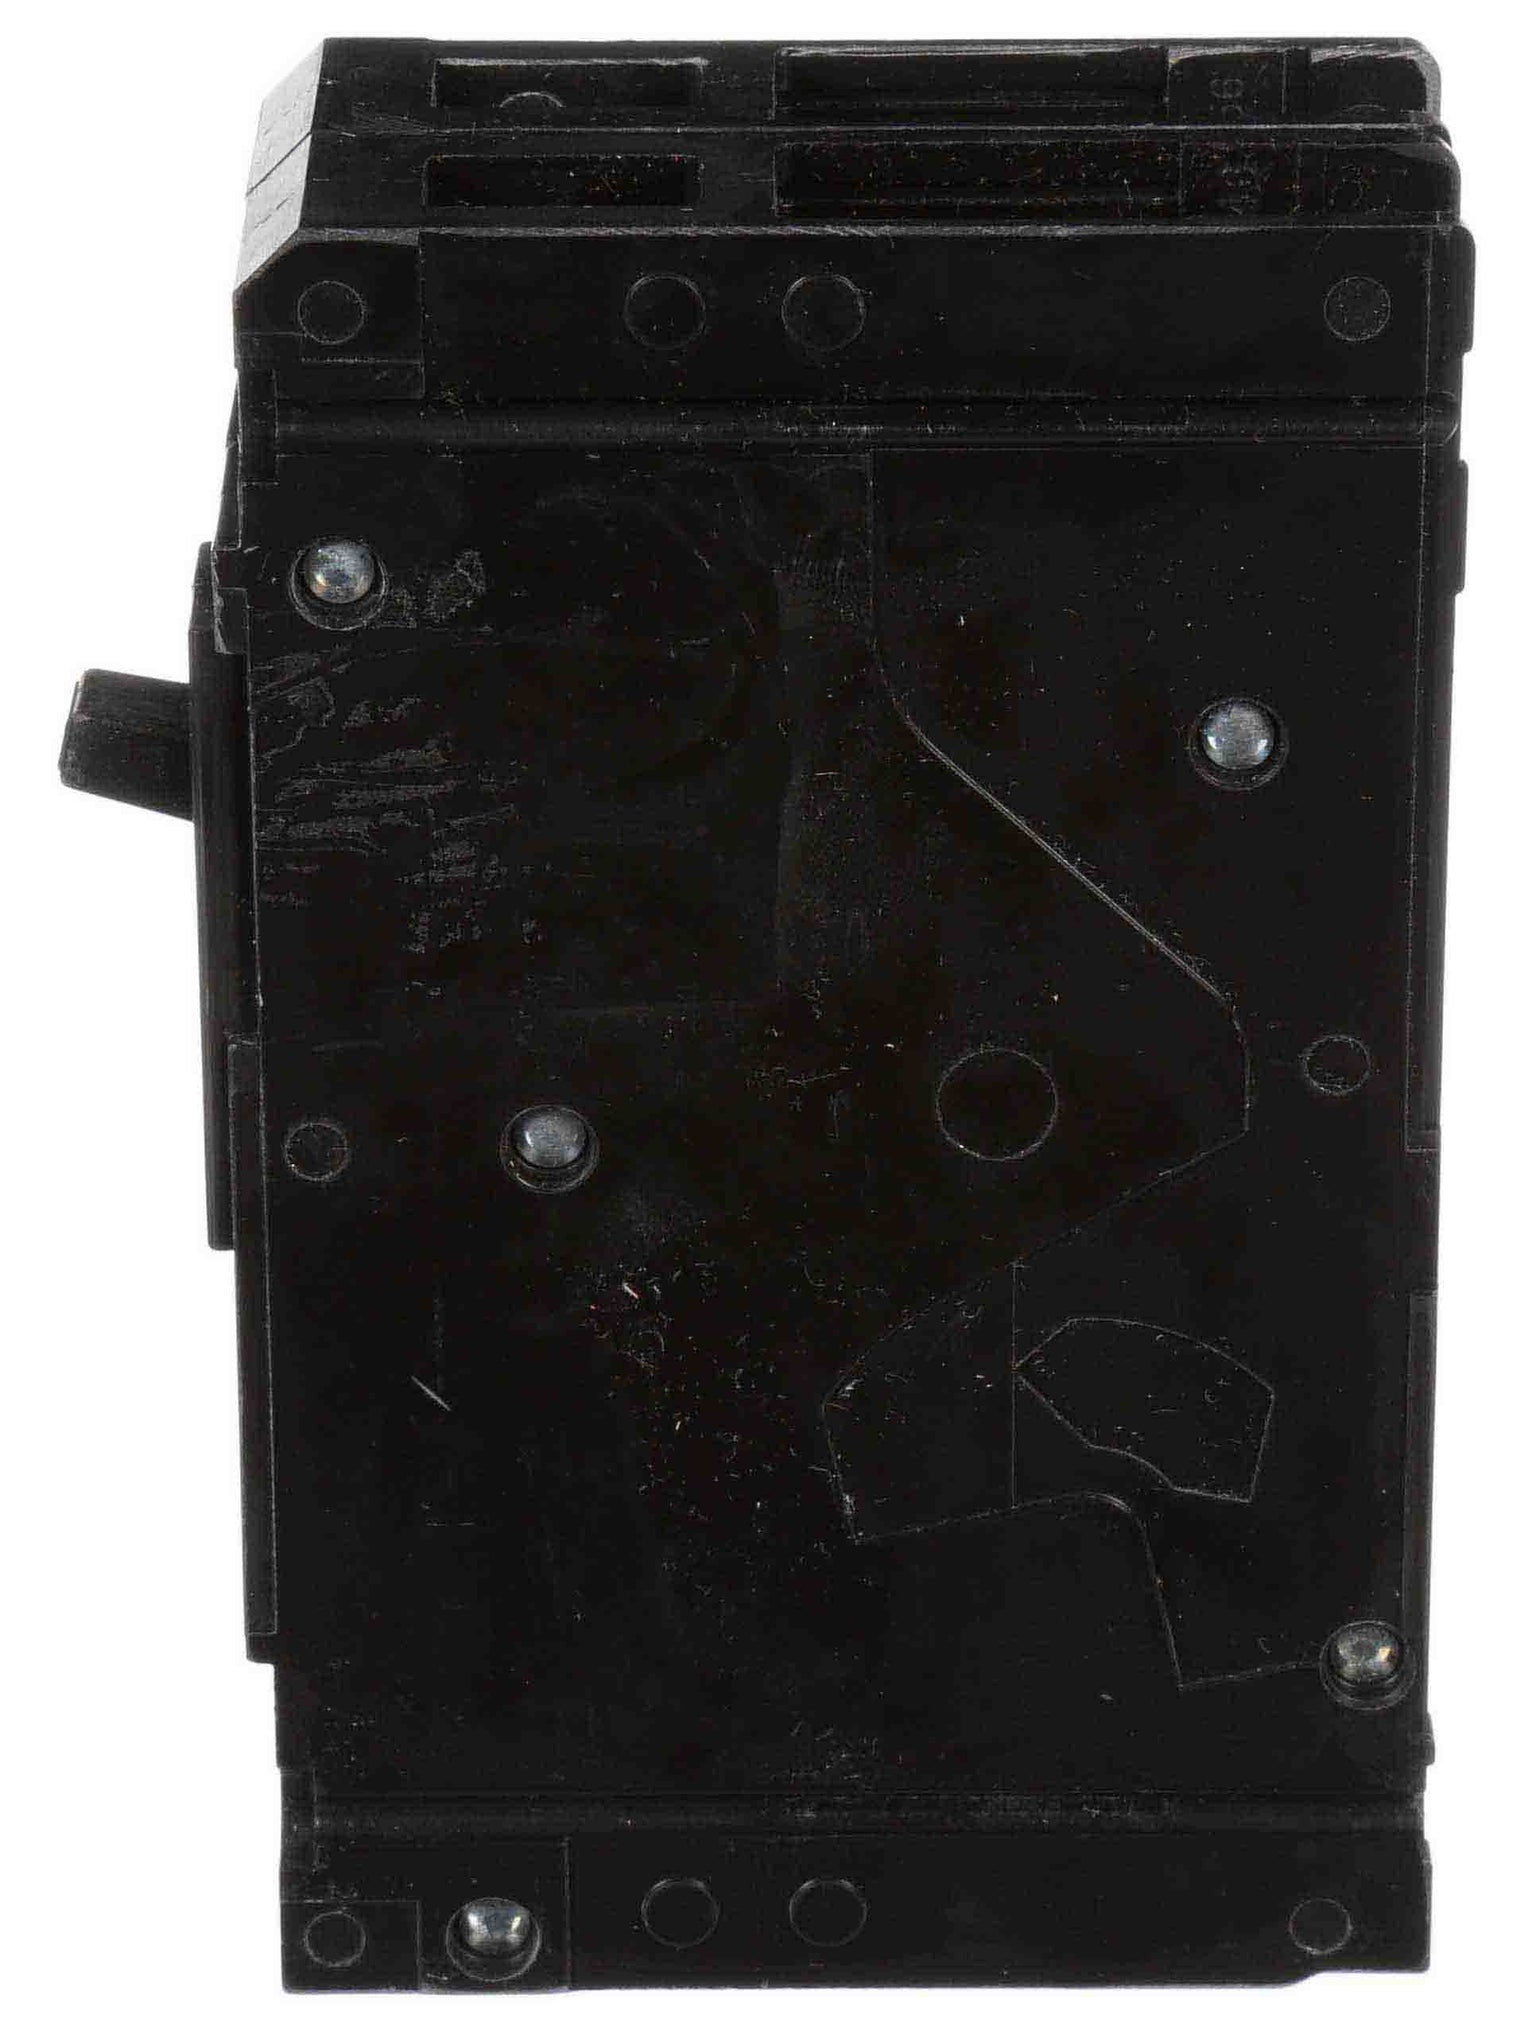 ED42B025L - Siemens - Molded Case Circuit Breaker